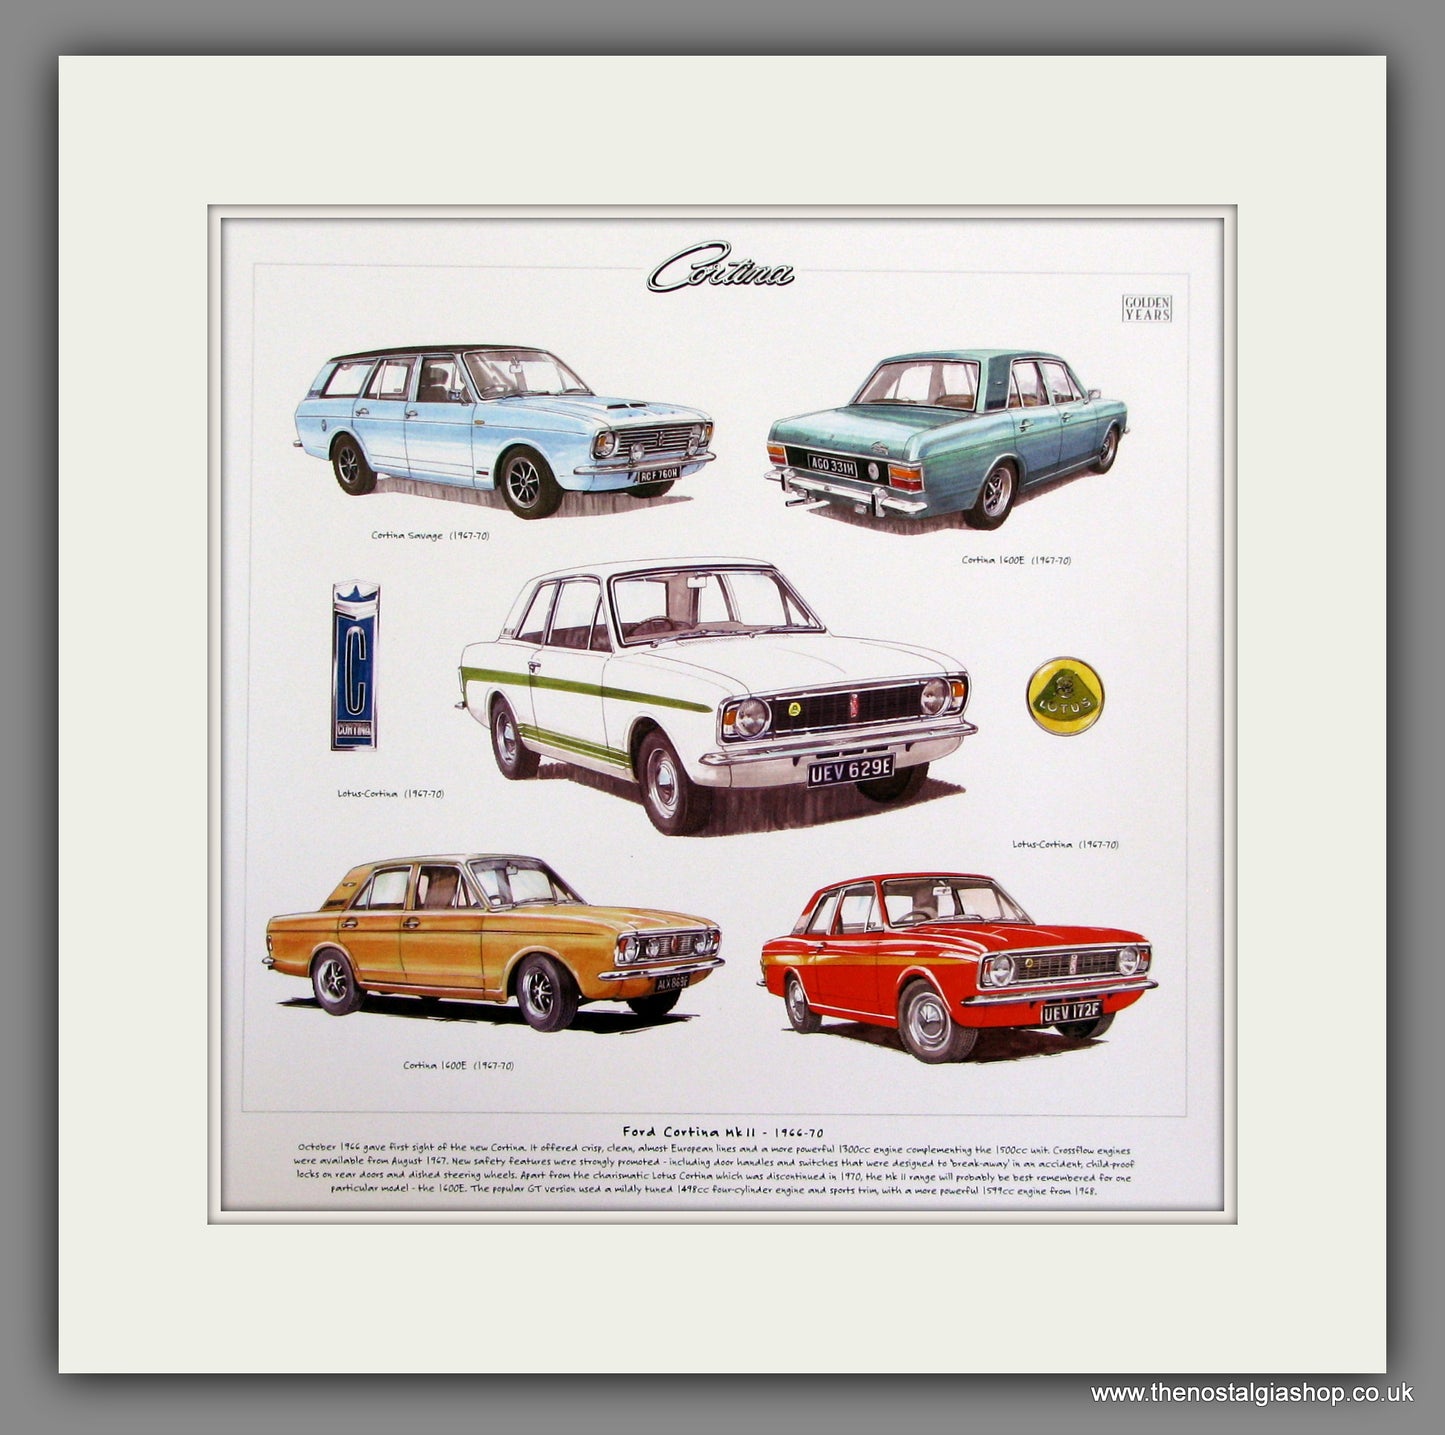 Ford Cortina MkII 1966-70 Mounted Car Print